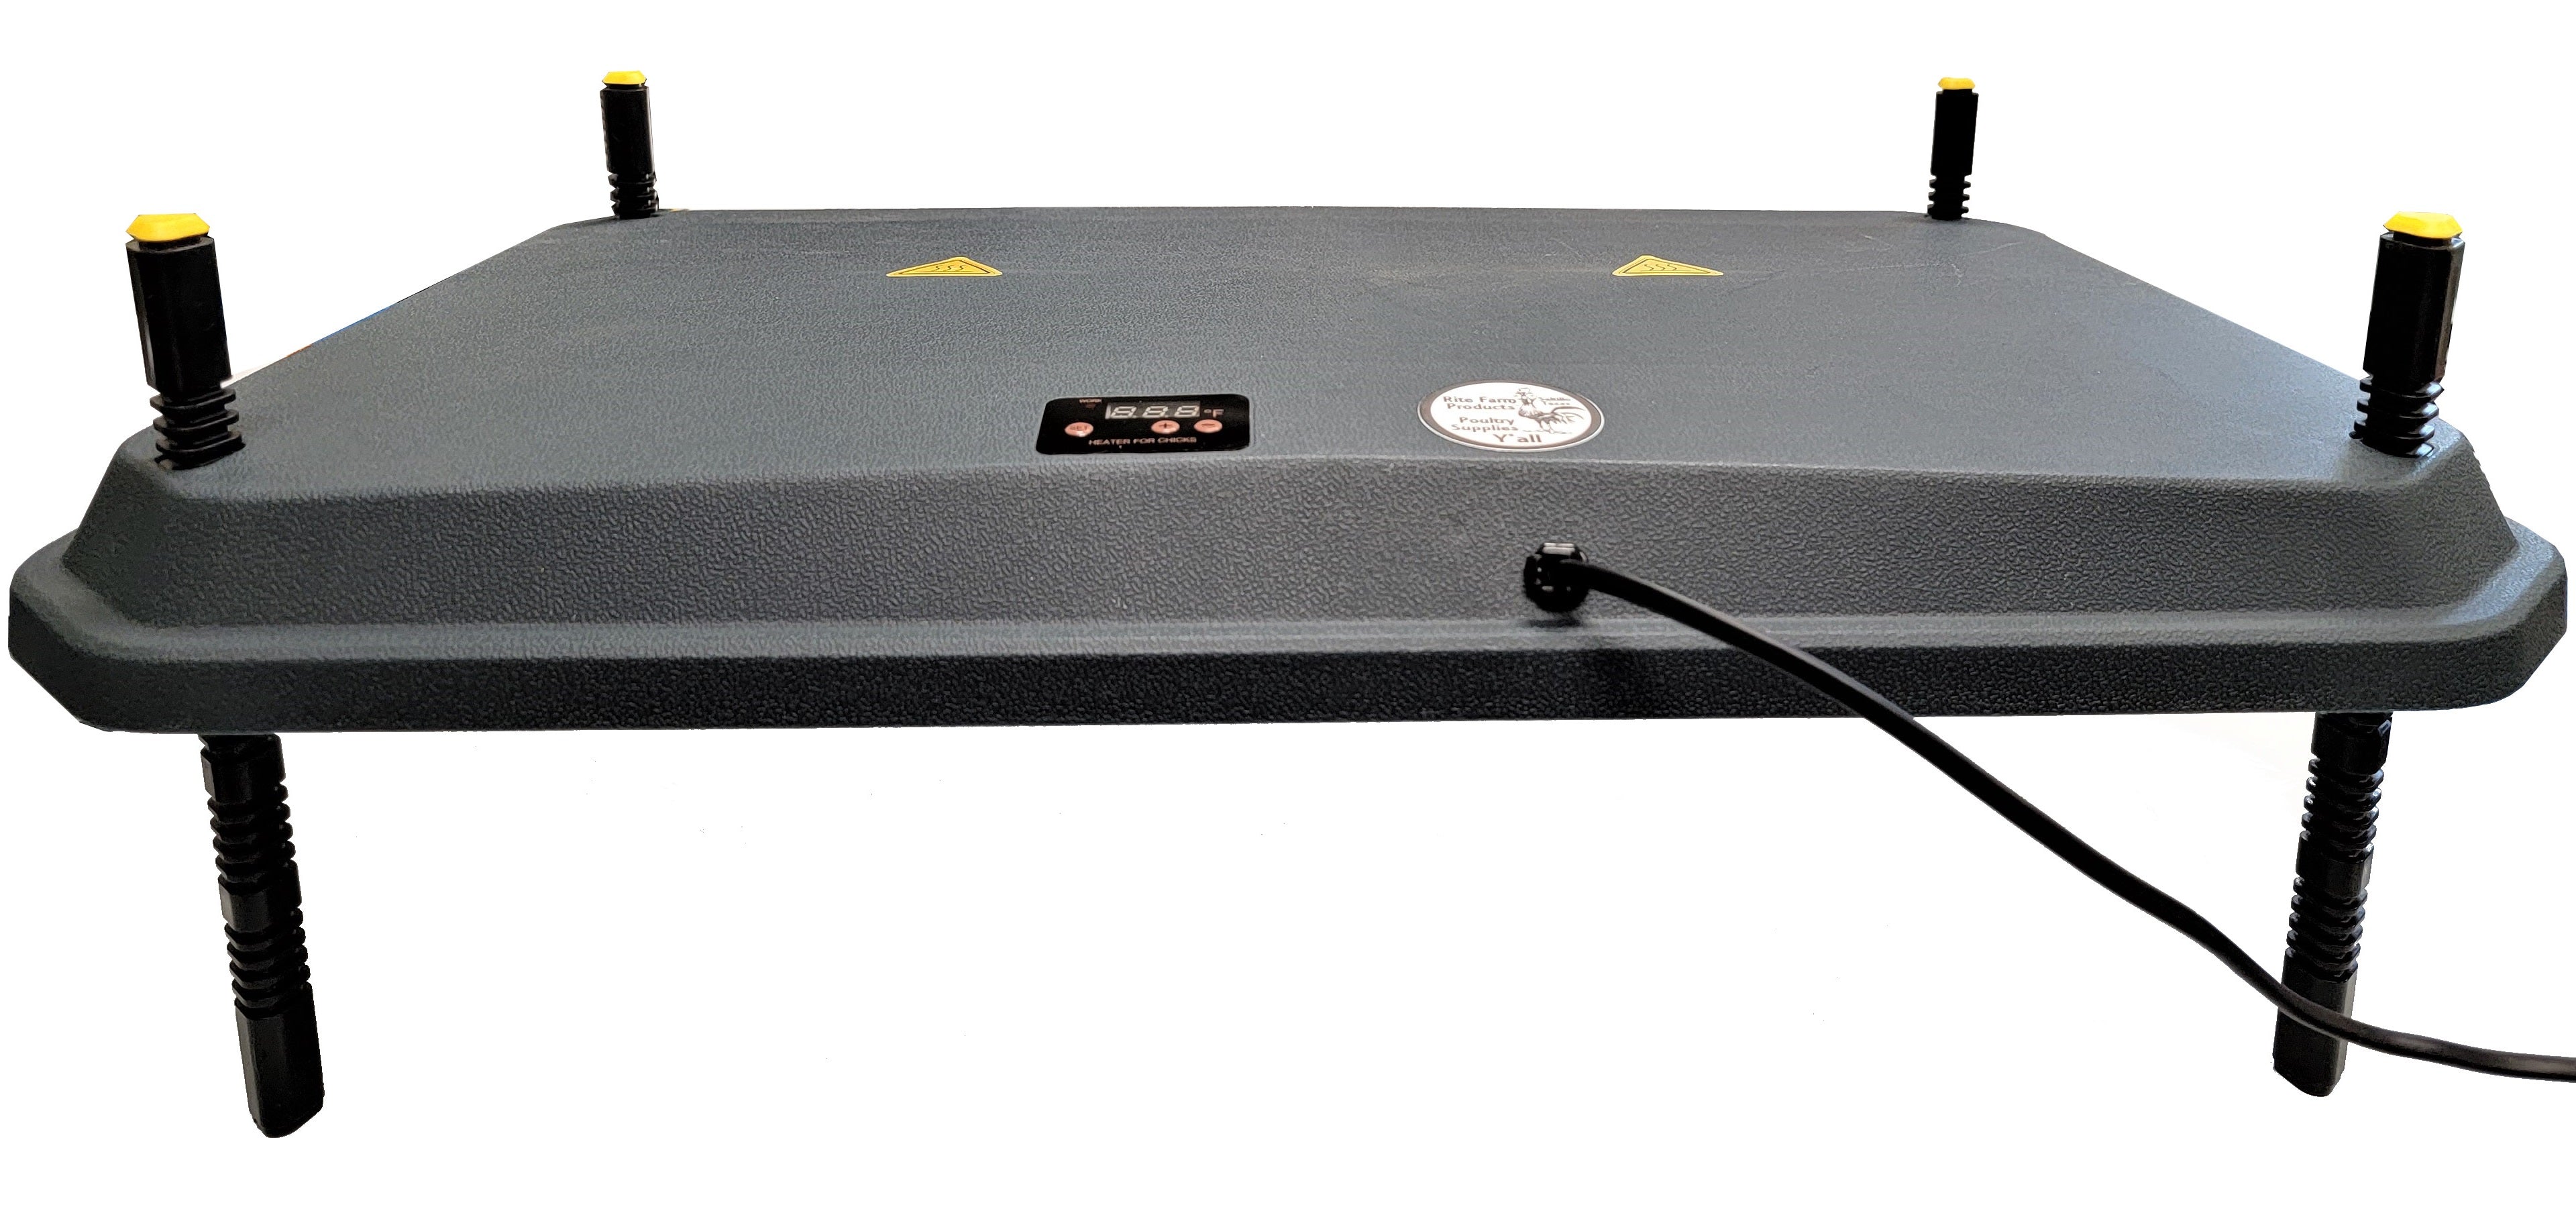 16"x24" Chick Brooder Heating Plate 66-Watts Digital Heat Temperature Adjustable